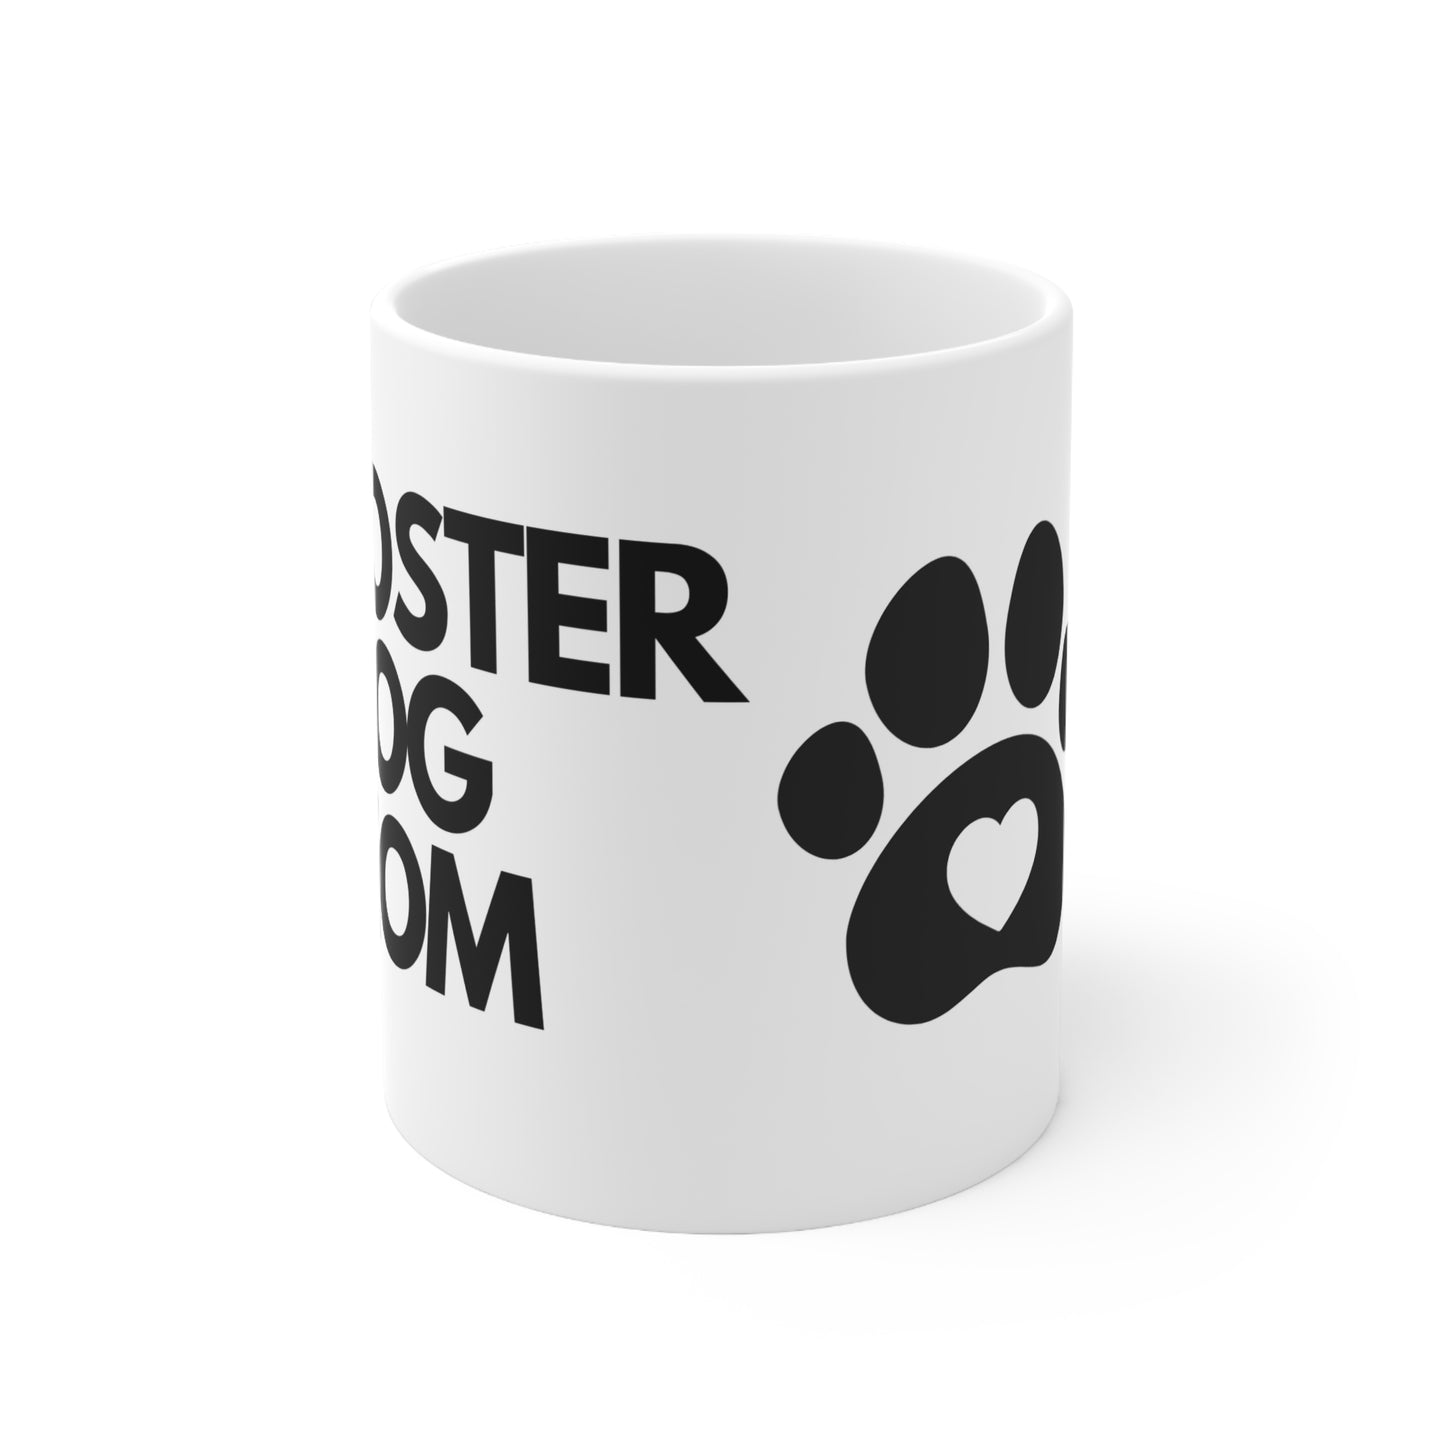 Foster Dog Mom-  Ceramic Mug 11oz